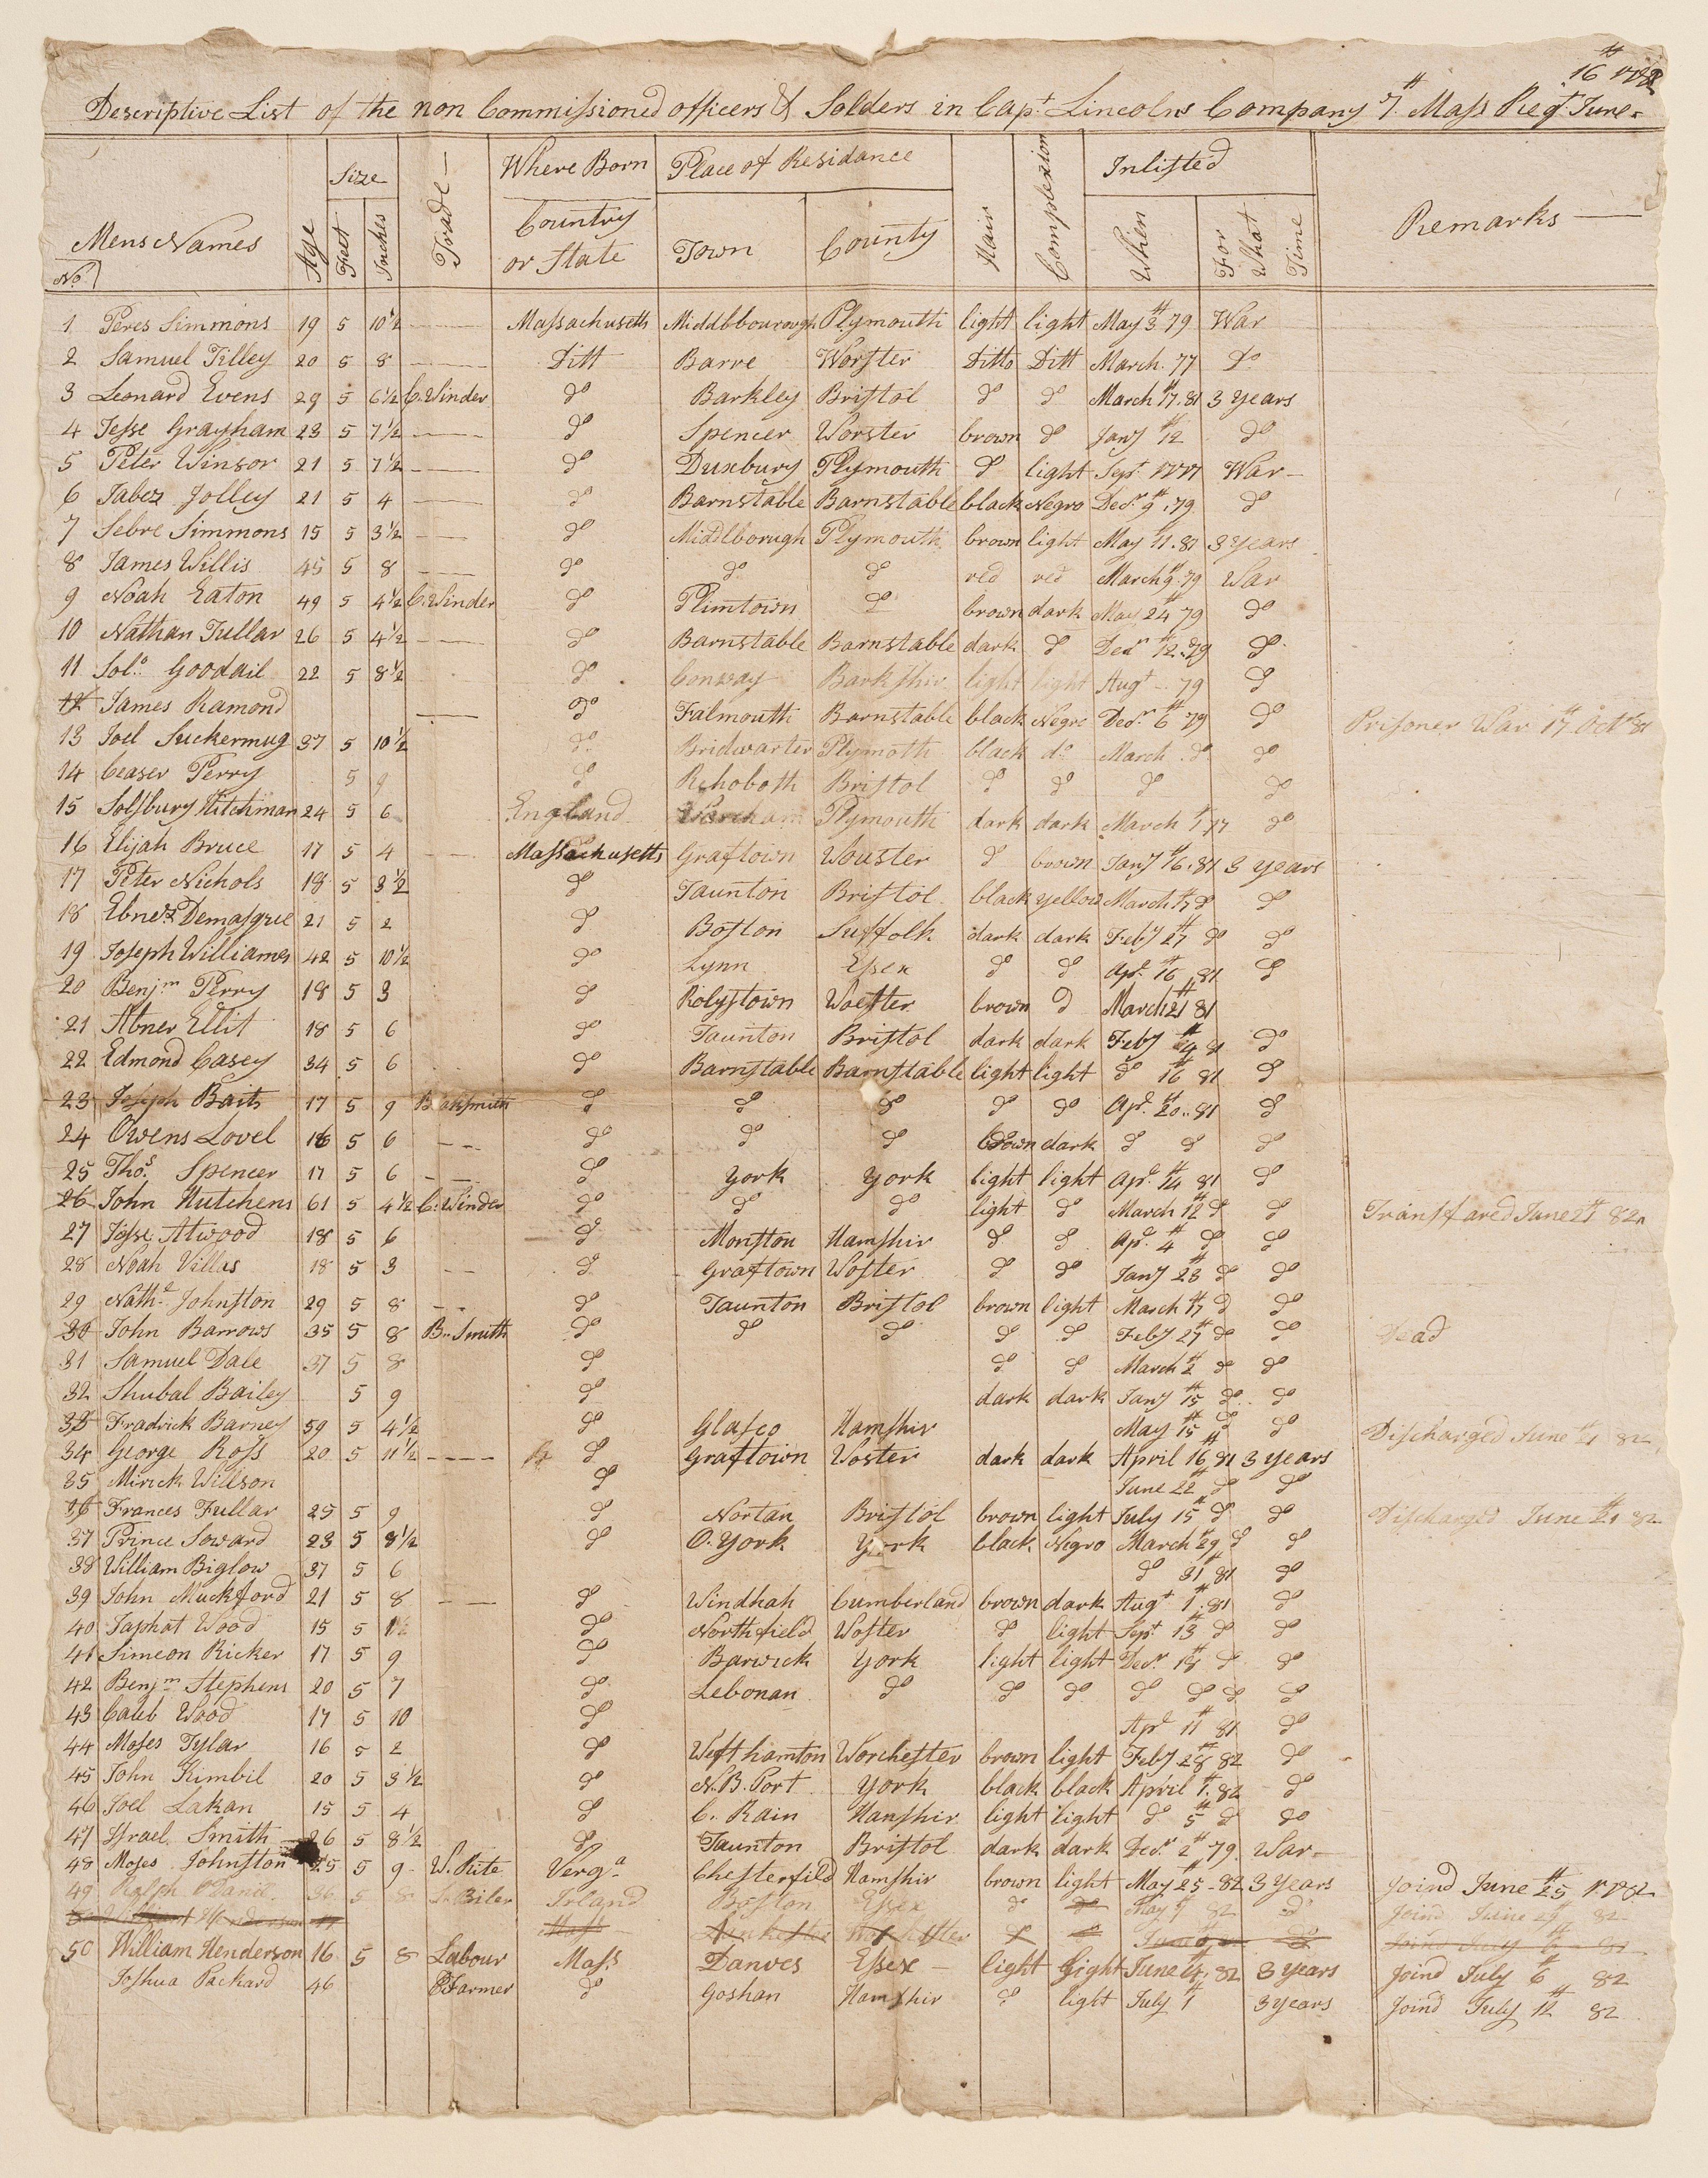 descriptive list for a company of the 7th Massachusetts Regiment